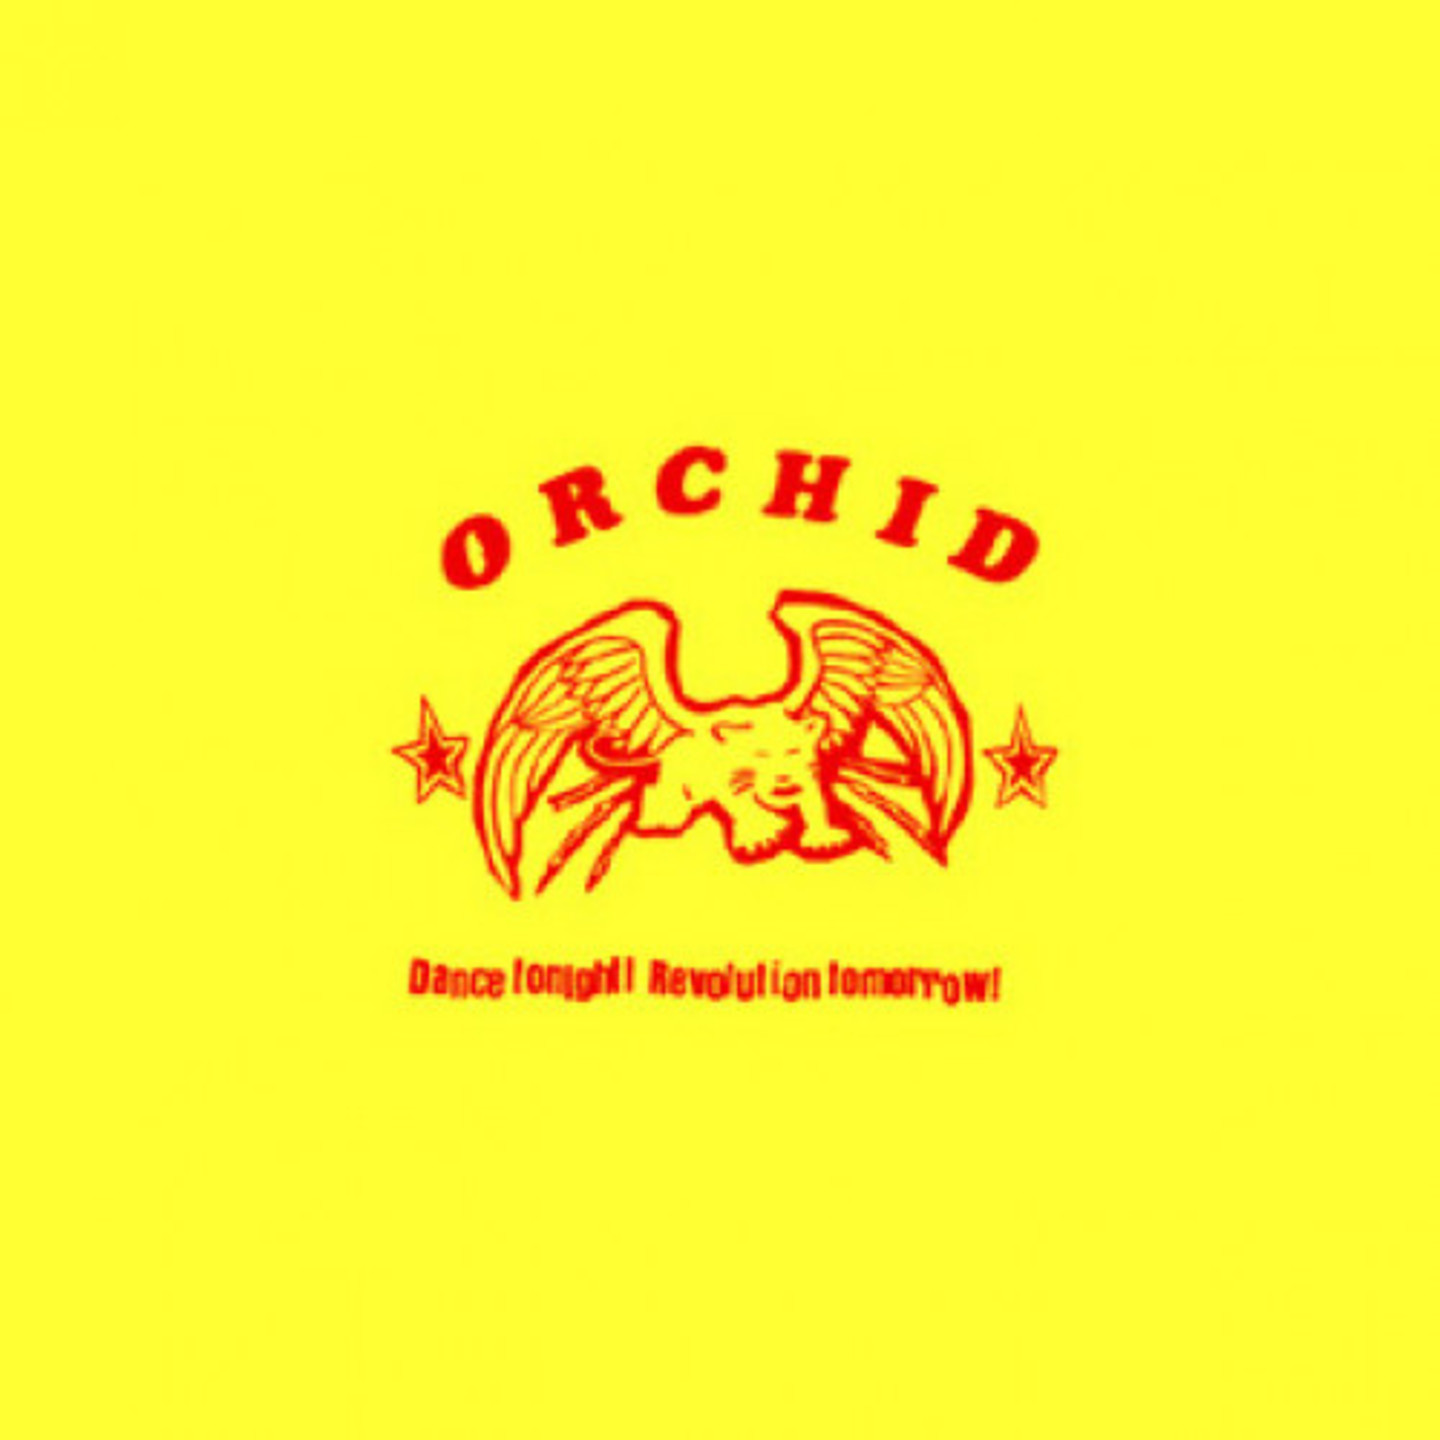 ORCHID - Dance Tonight Revolution Tomorrow 10